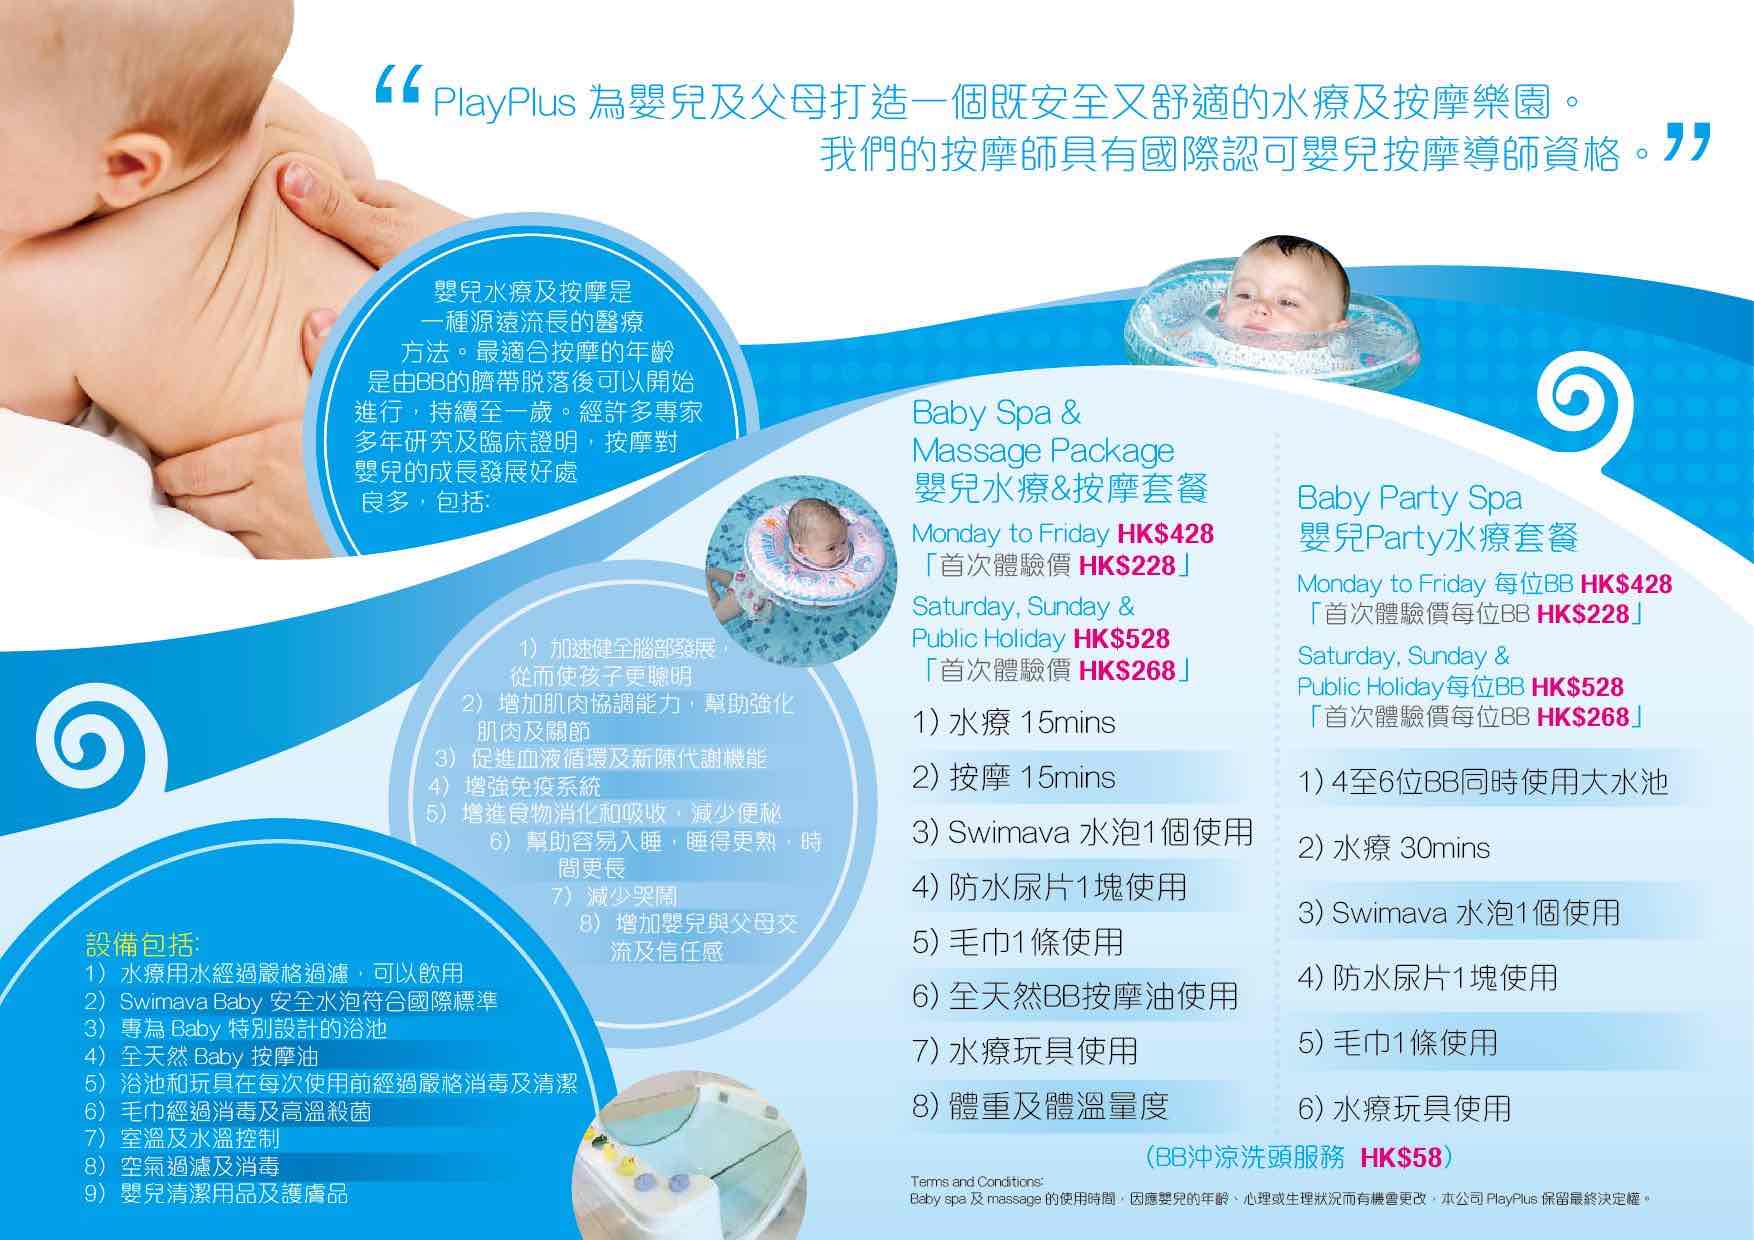 Playplus Baby Spa的特許經營香港區加盟店項目7